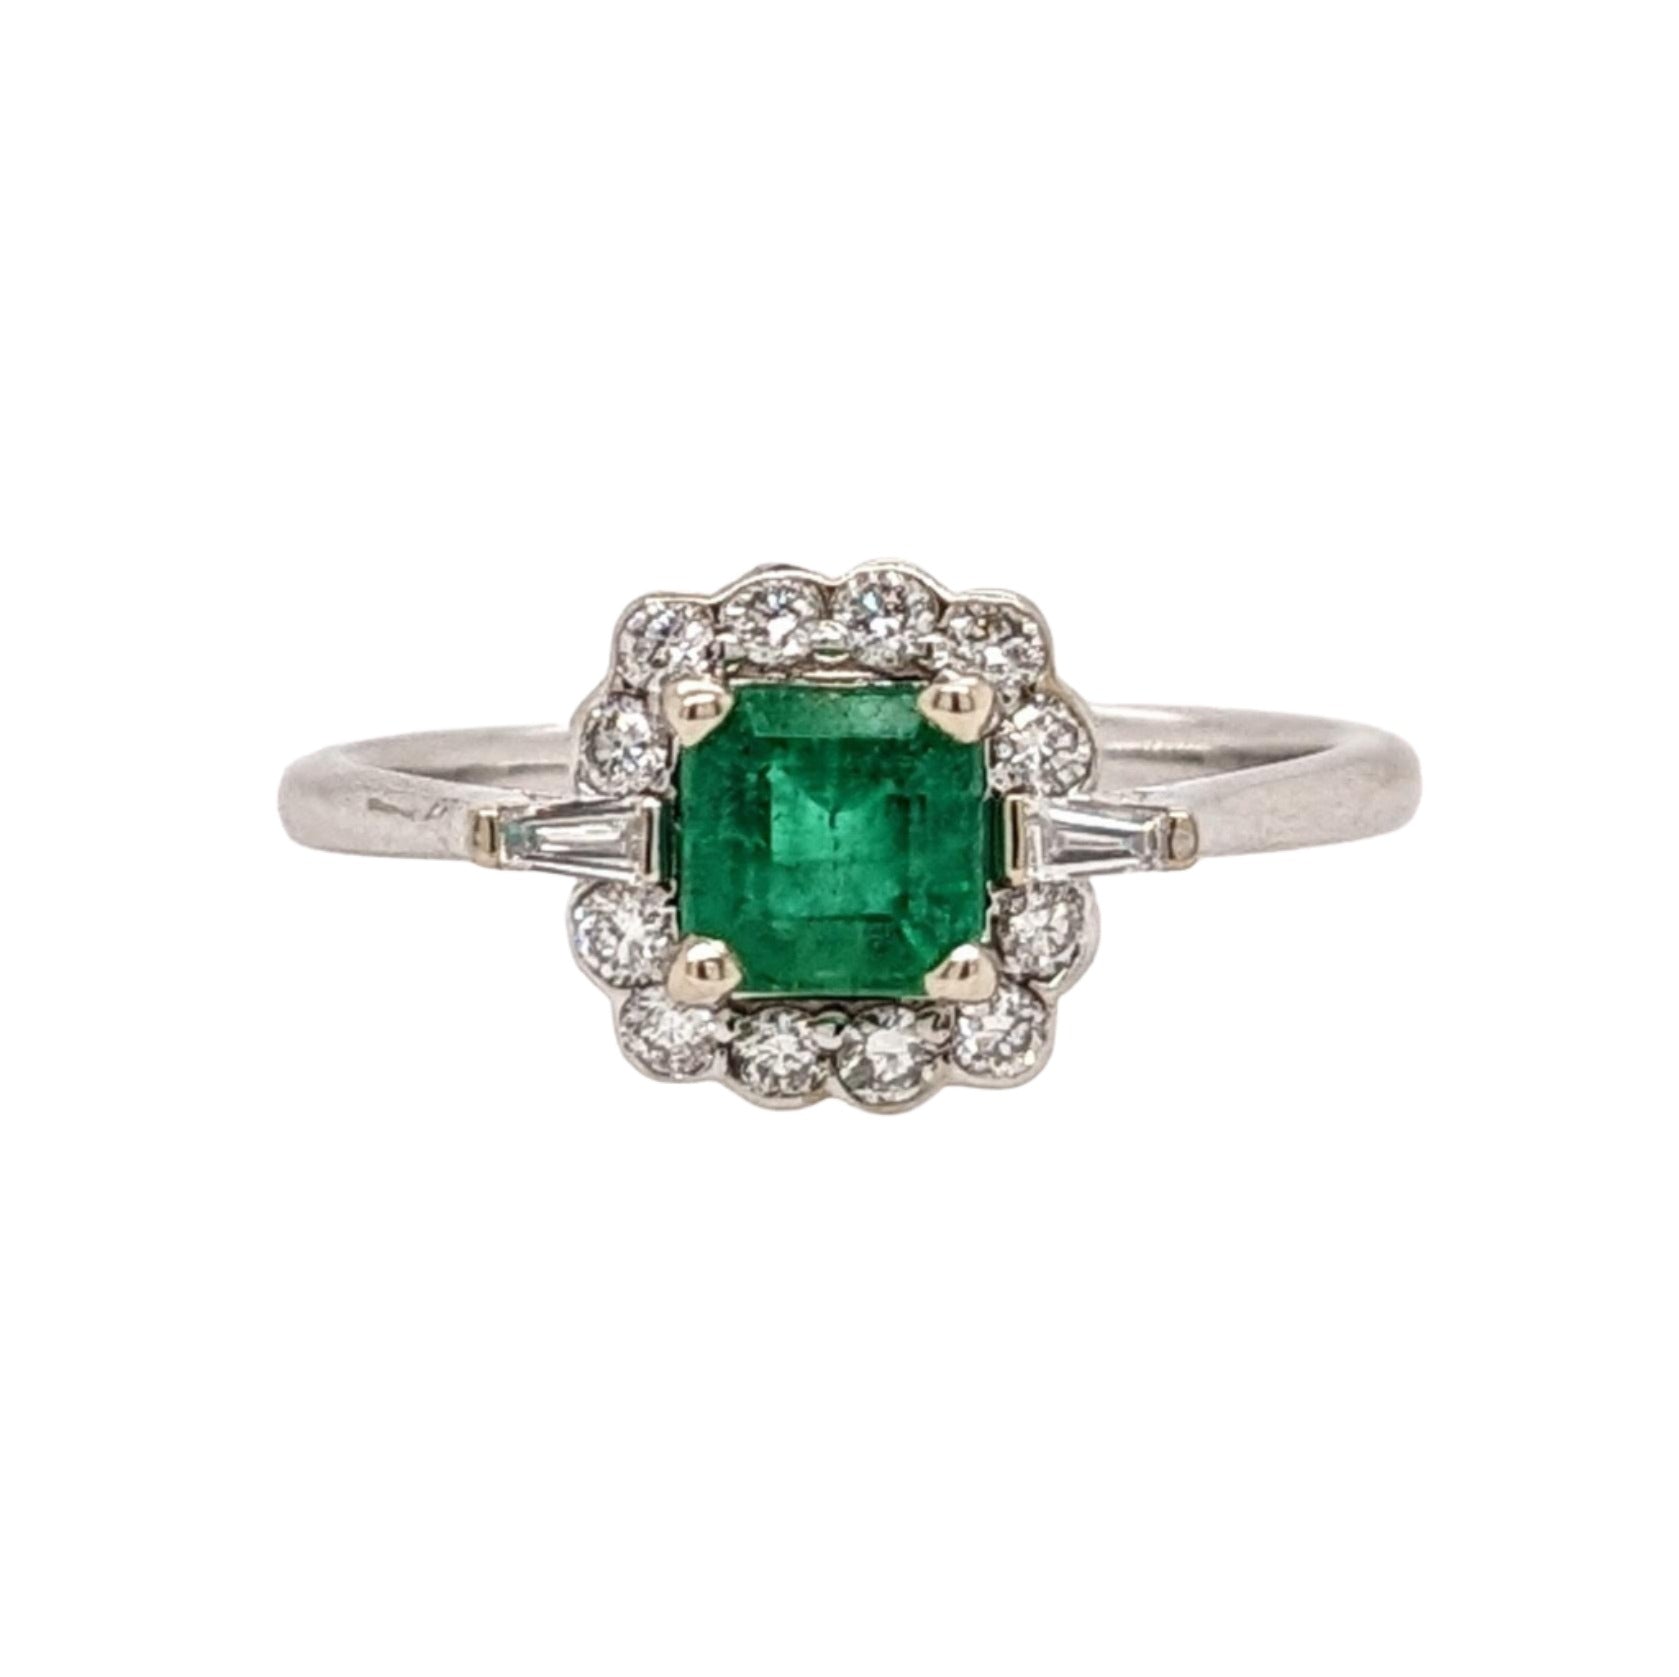 Zambian Emerald w Earth Mined Diamonds in Solid 14K White Gold EM 5mm